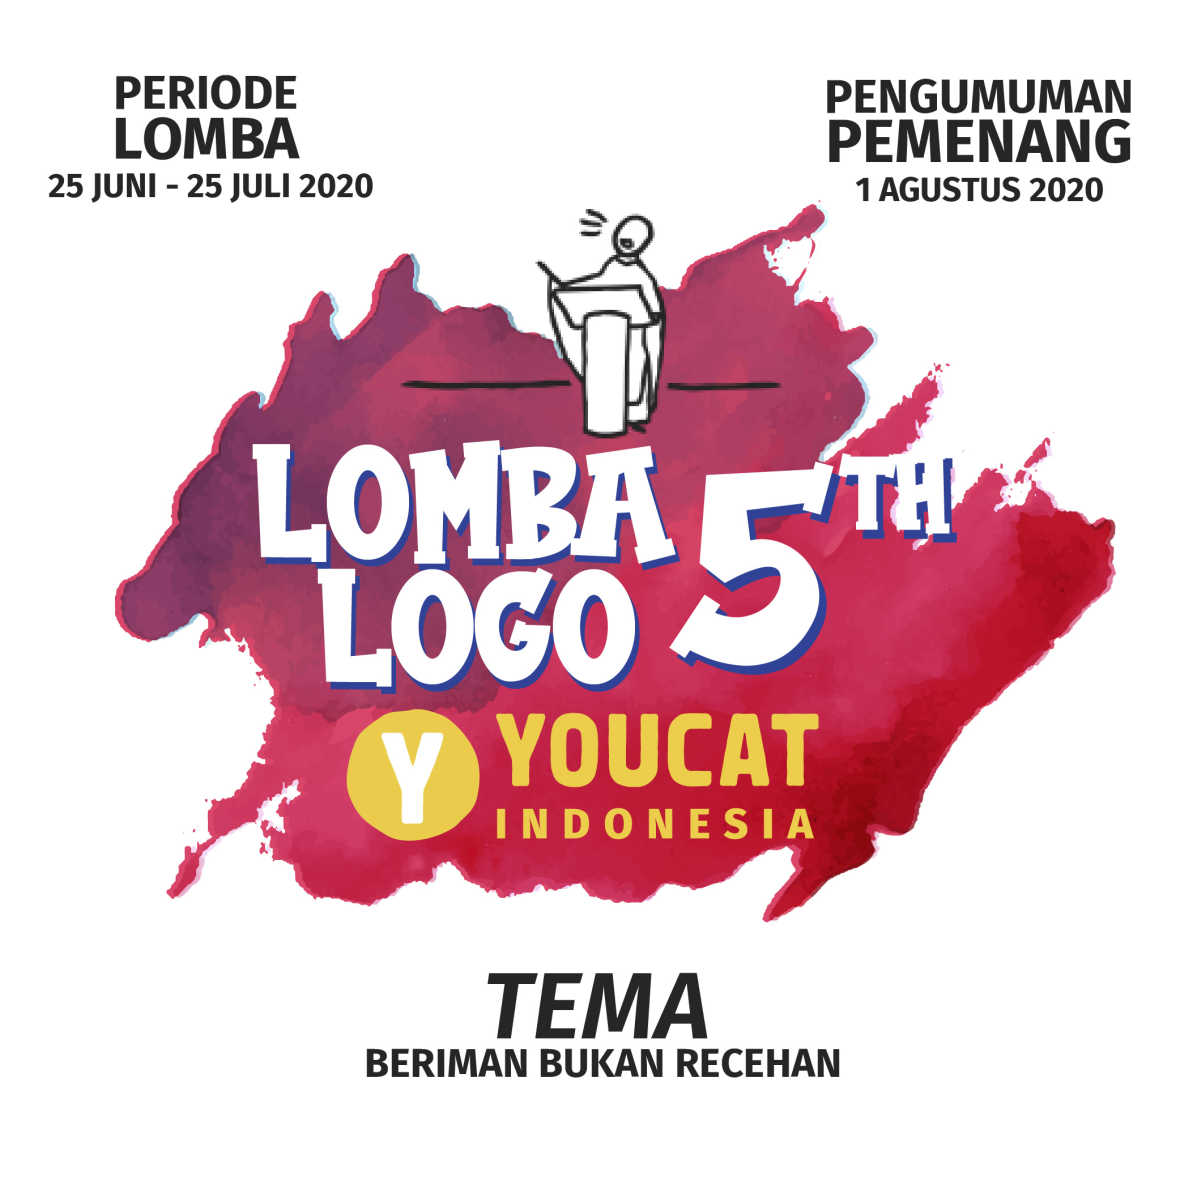 LOMBA LOGO 5 TAHUN YOUCAT INDONESIA